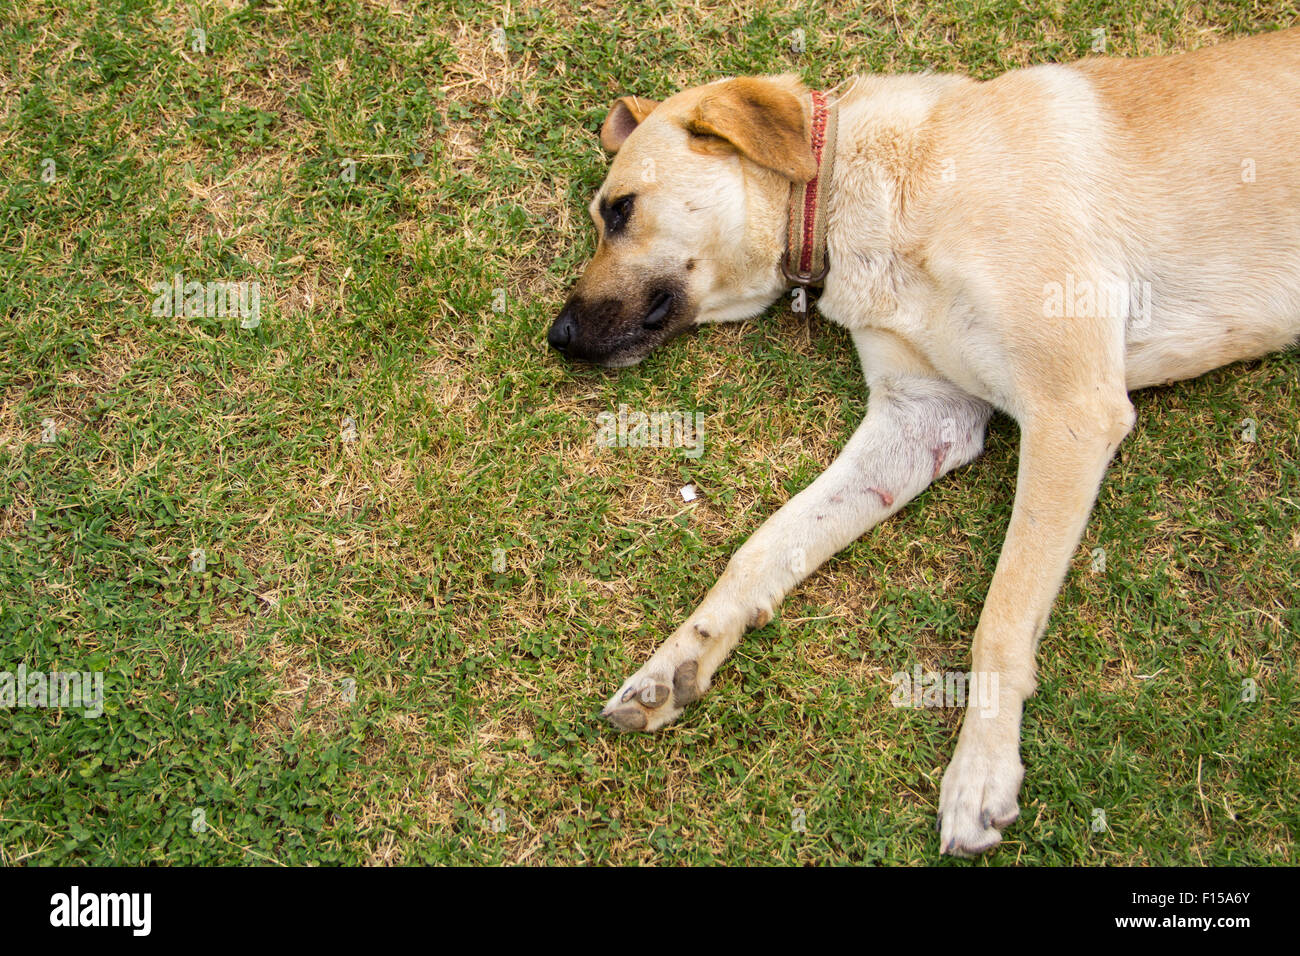 thirsty dog lying on grass Stock Photo